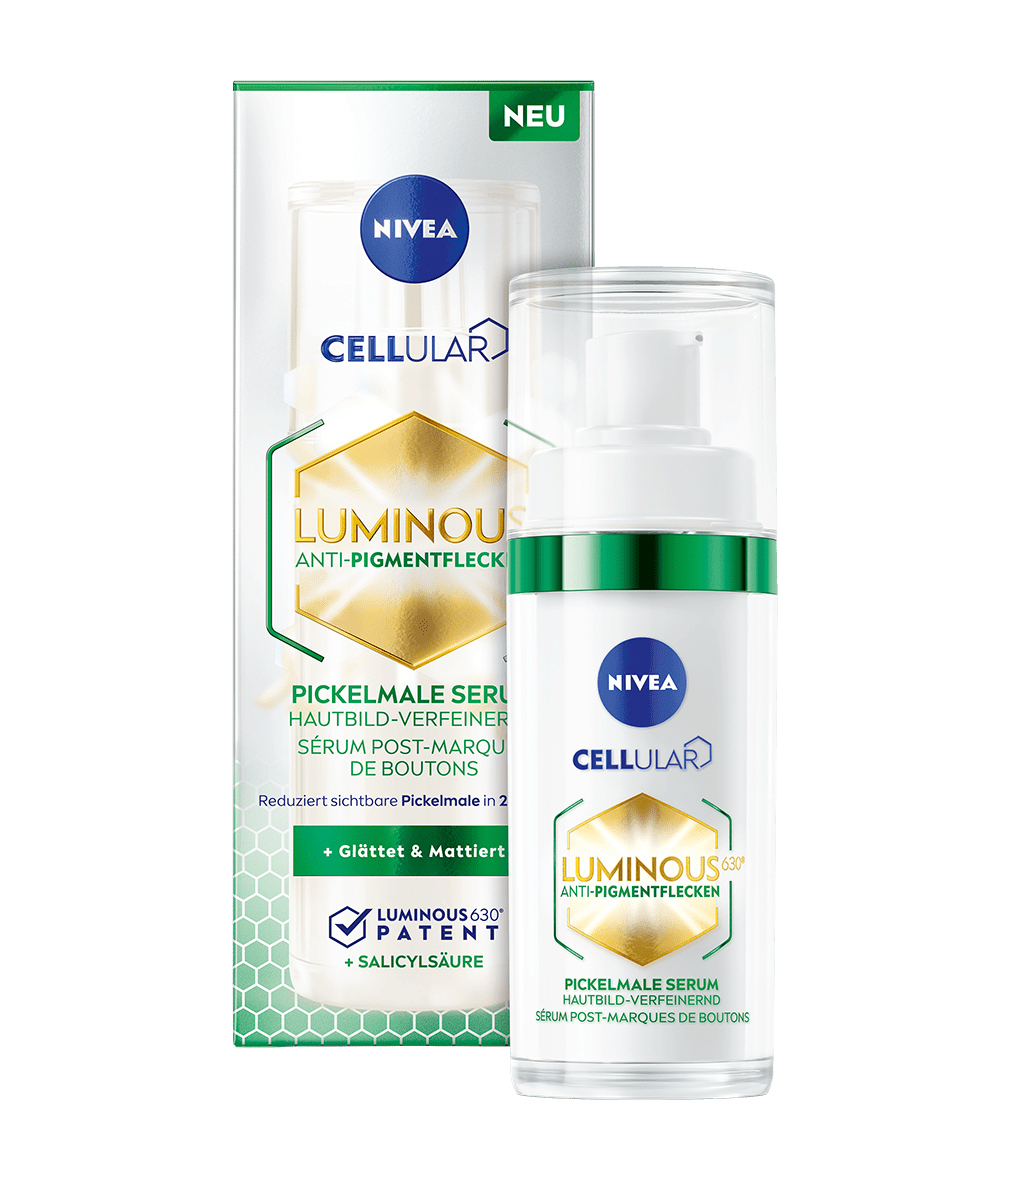 NIVEA Cellular Luminous630 Pimple Mark